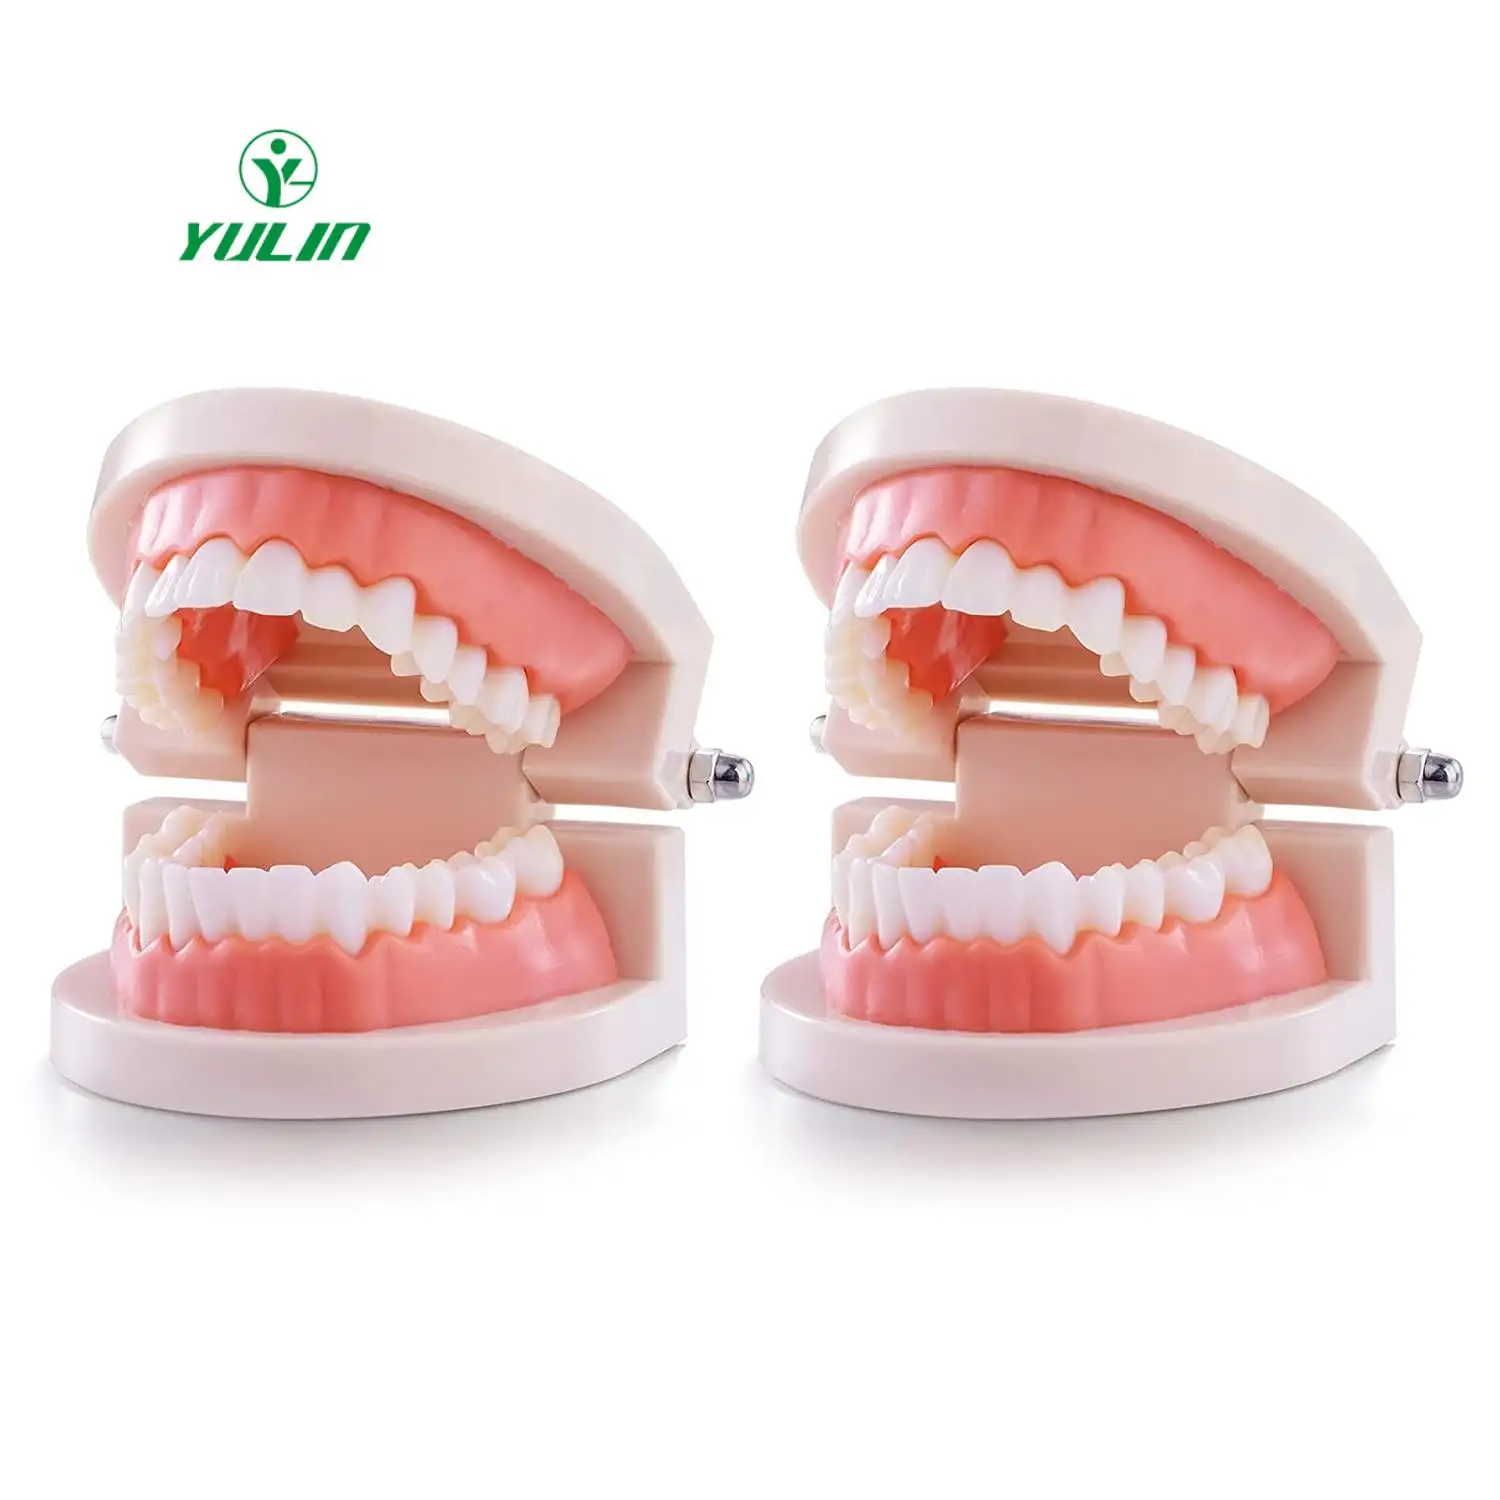 Dental Standard Teeth Life size Dental Model Human Teeth Model Brushing Model for Dentist Teaching Study